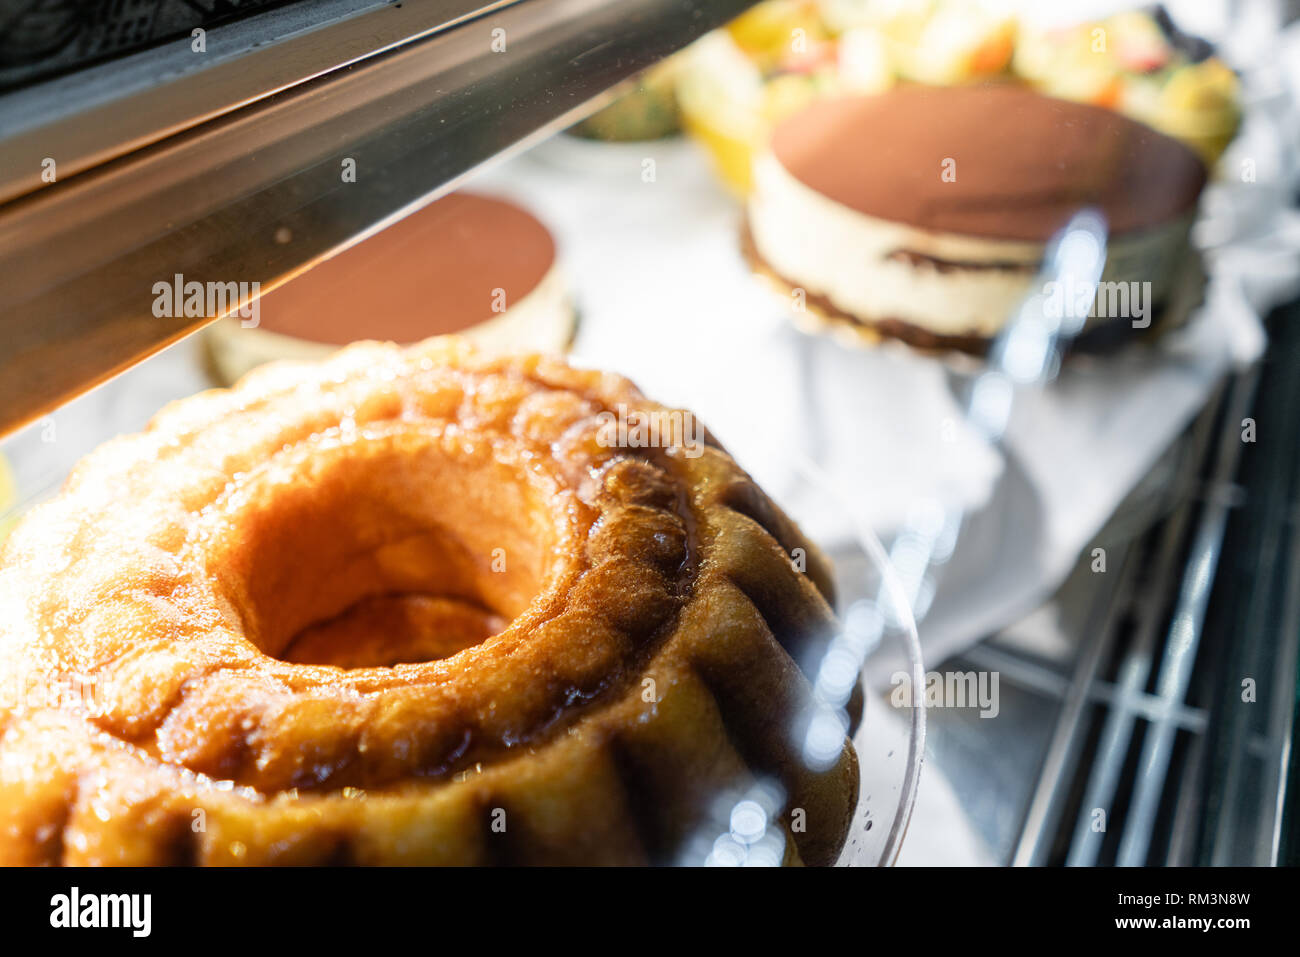 Cakes, Cheesecakes & Tiramisu — Florentine Pastry Shop